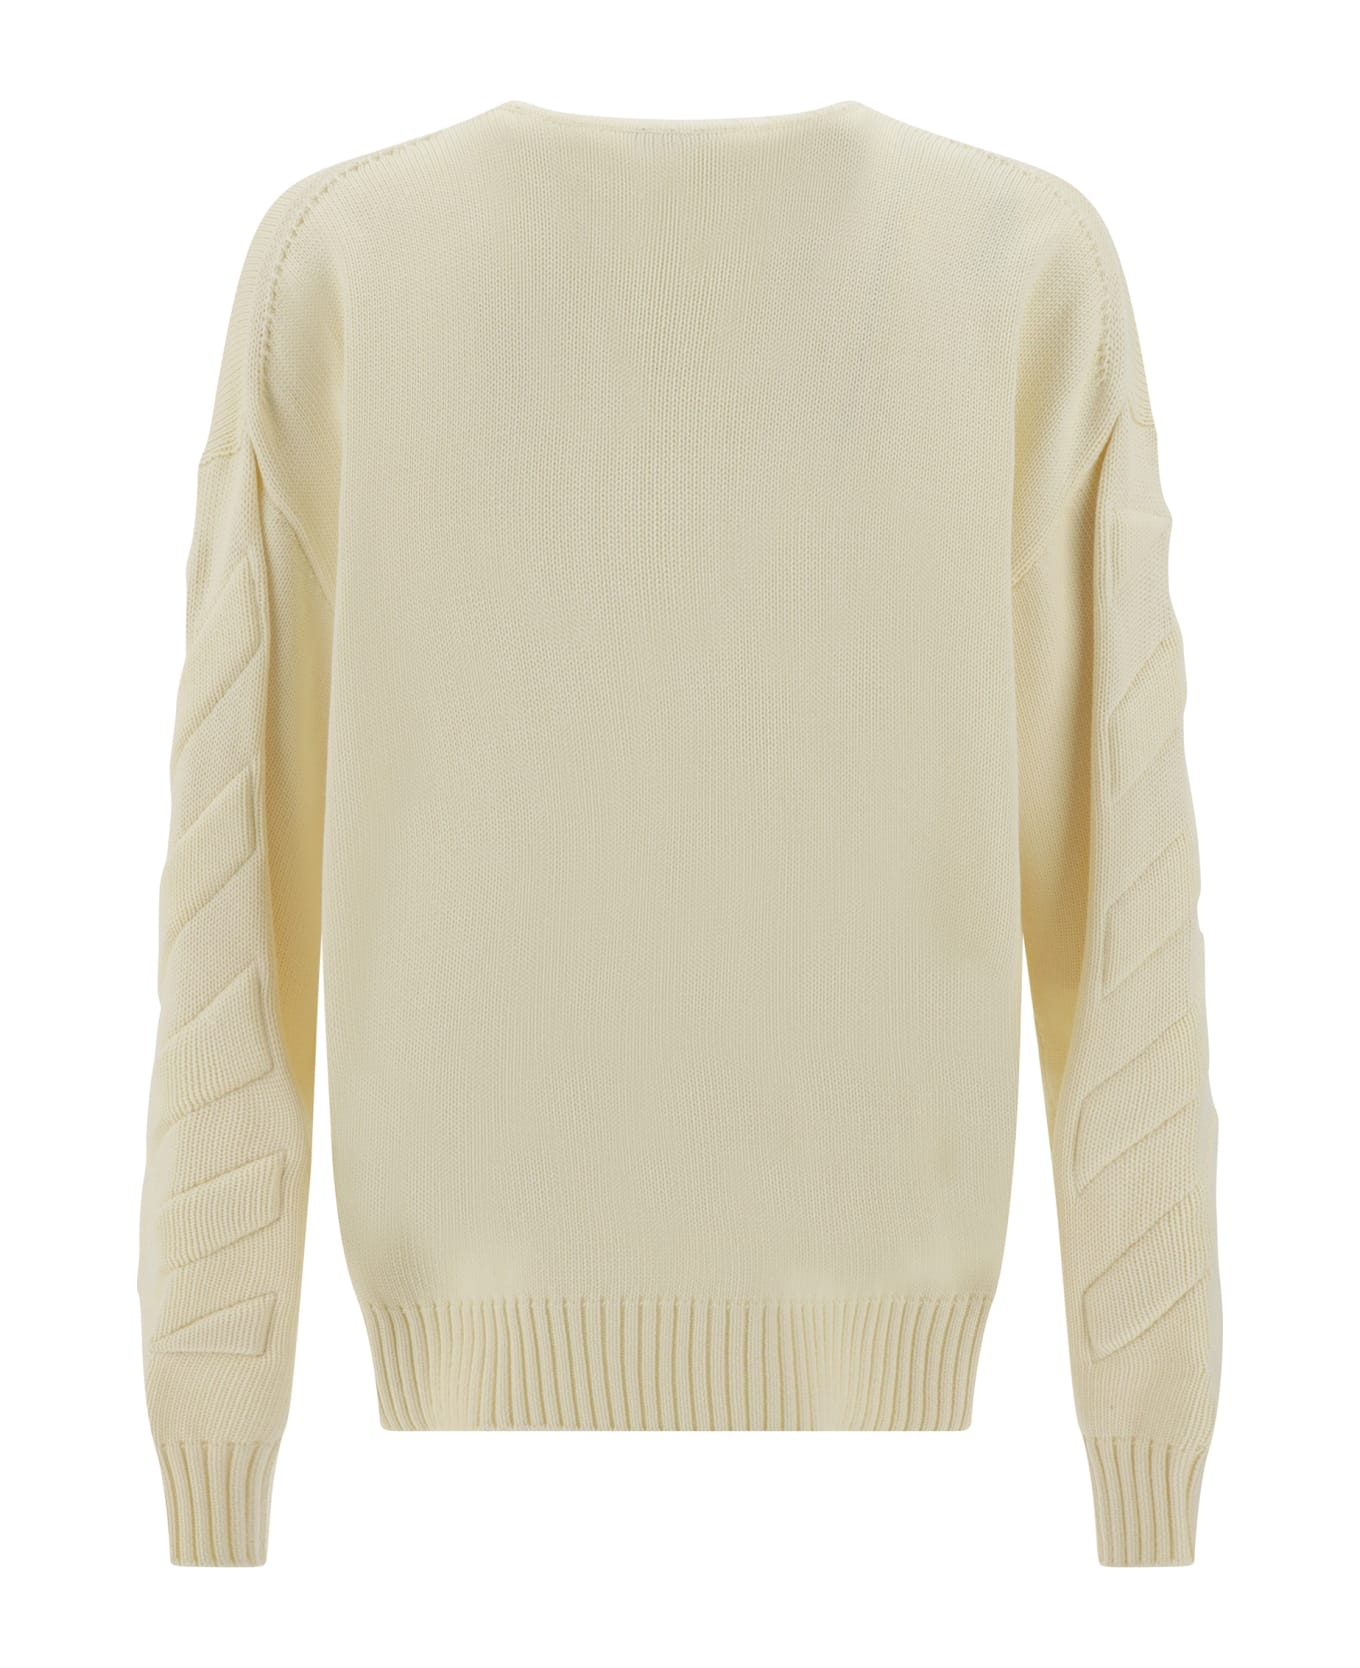 Off-White Sweater With Embossed Diagonal Motif - Cream Cream ニットウェア